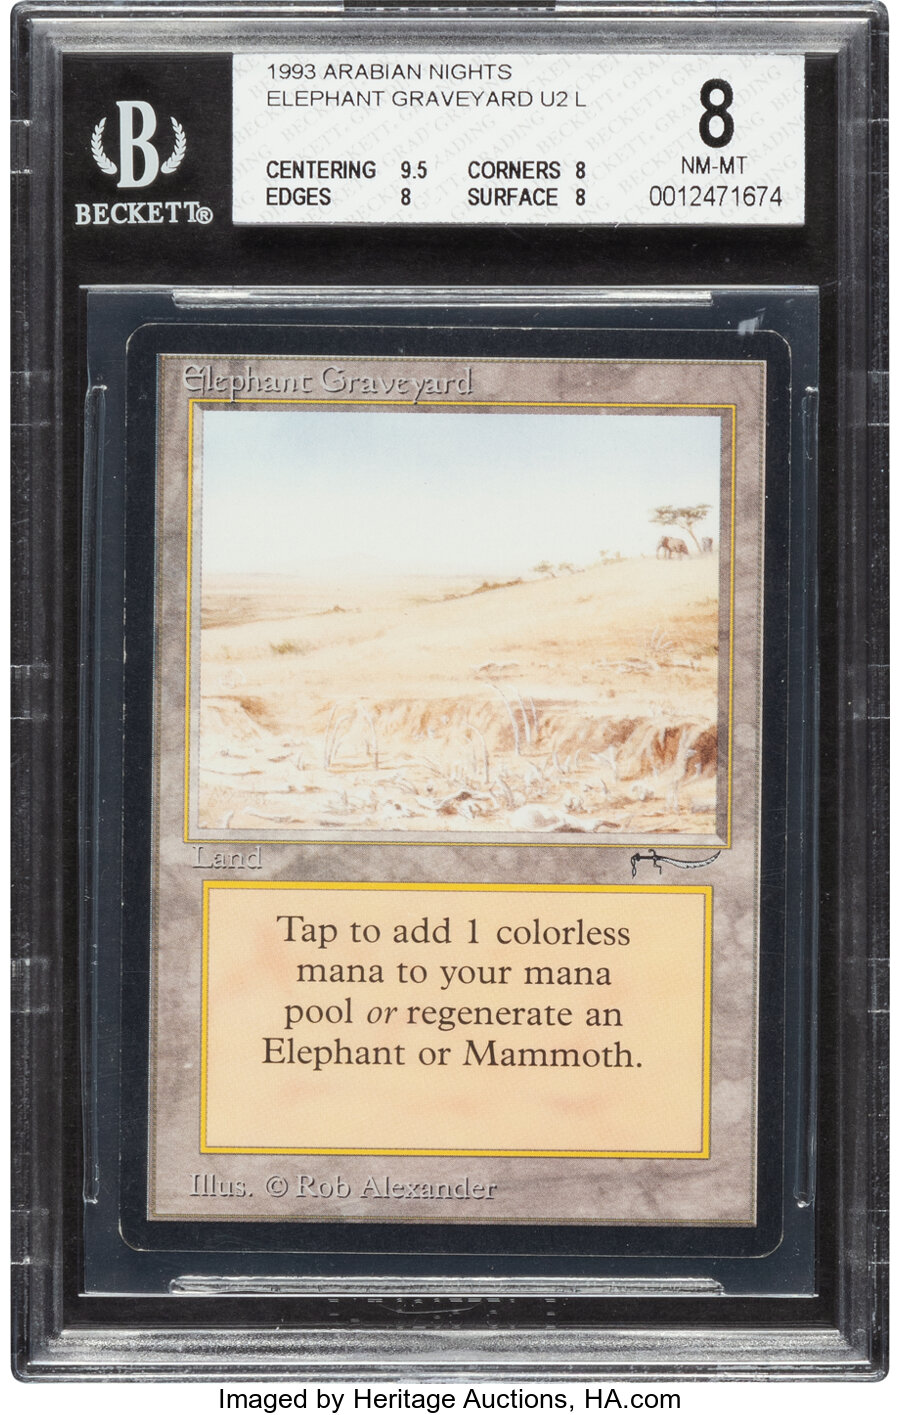 Magic: The Gathering Elephant Graveyard Arabian Nights Edition BGS 8 (Wizards of the Coast, 1993)